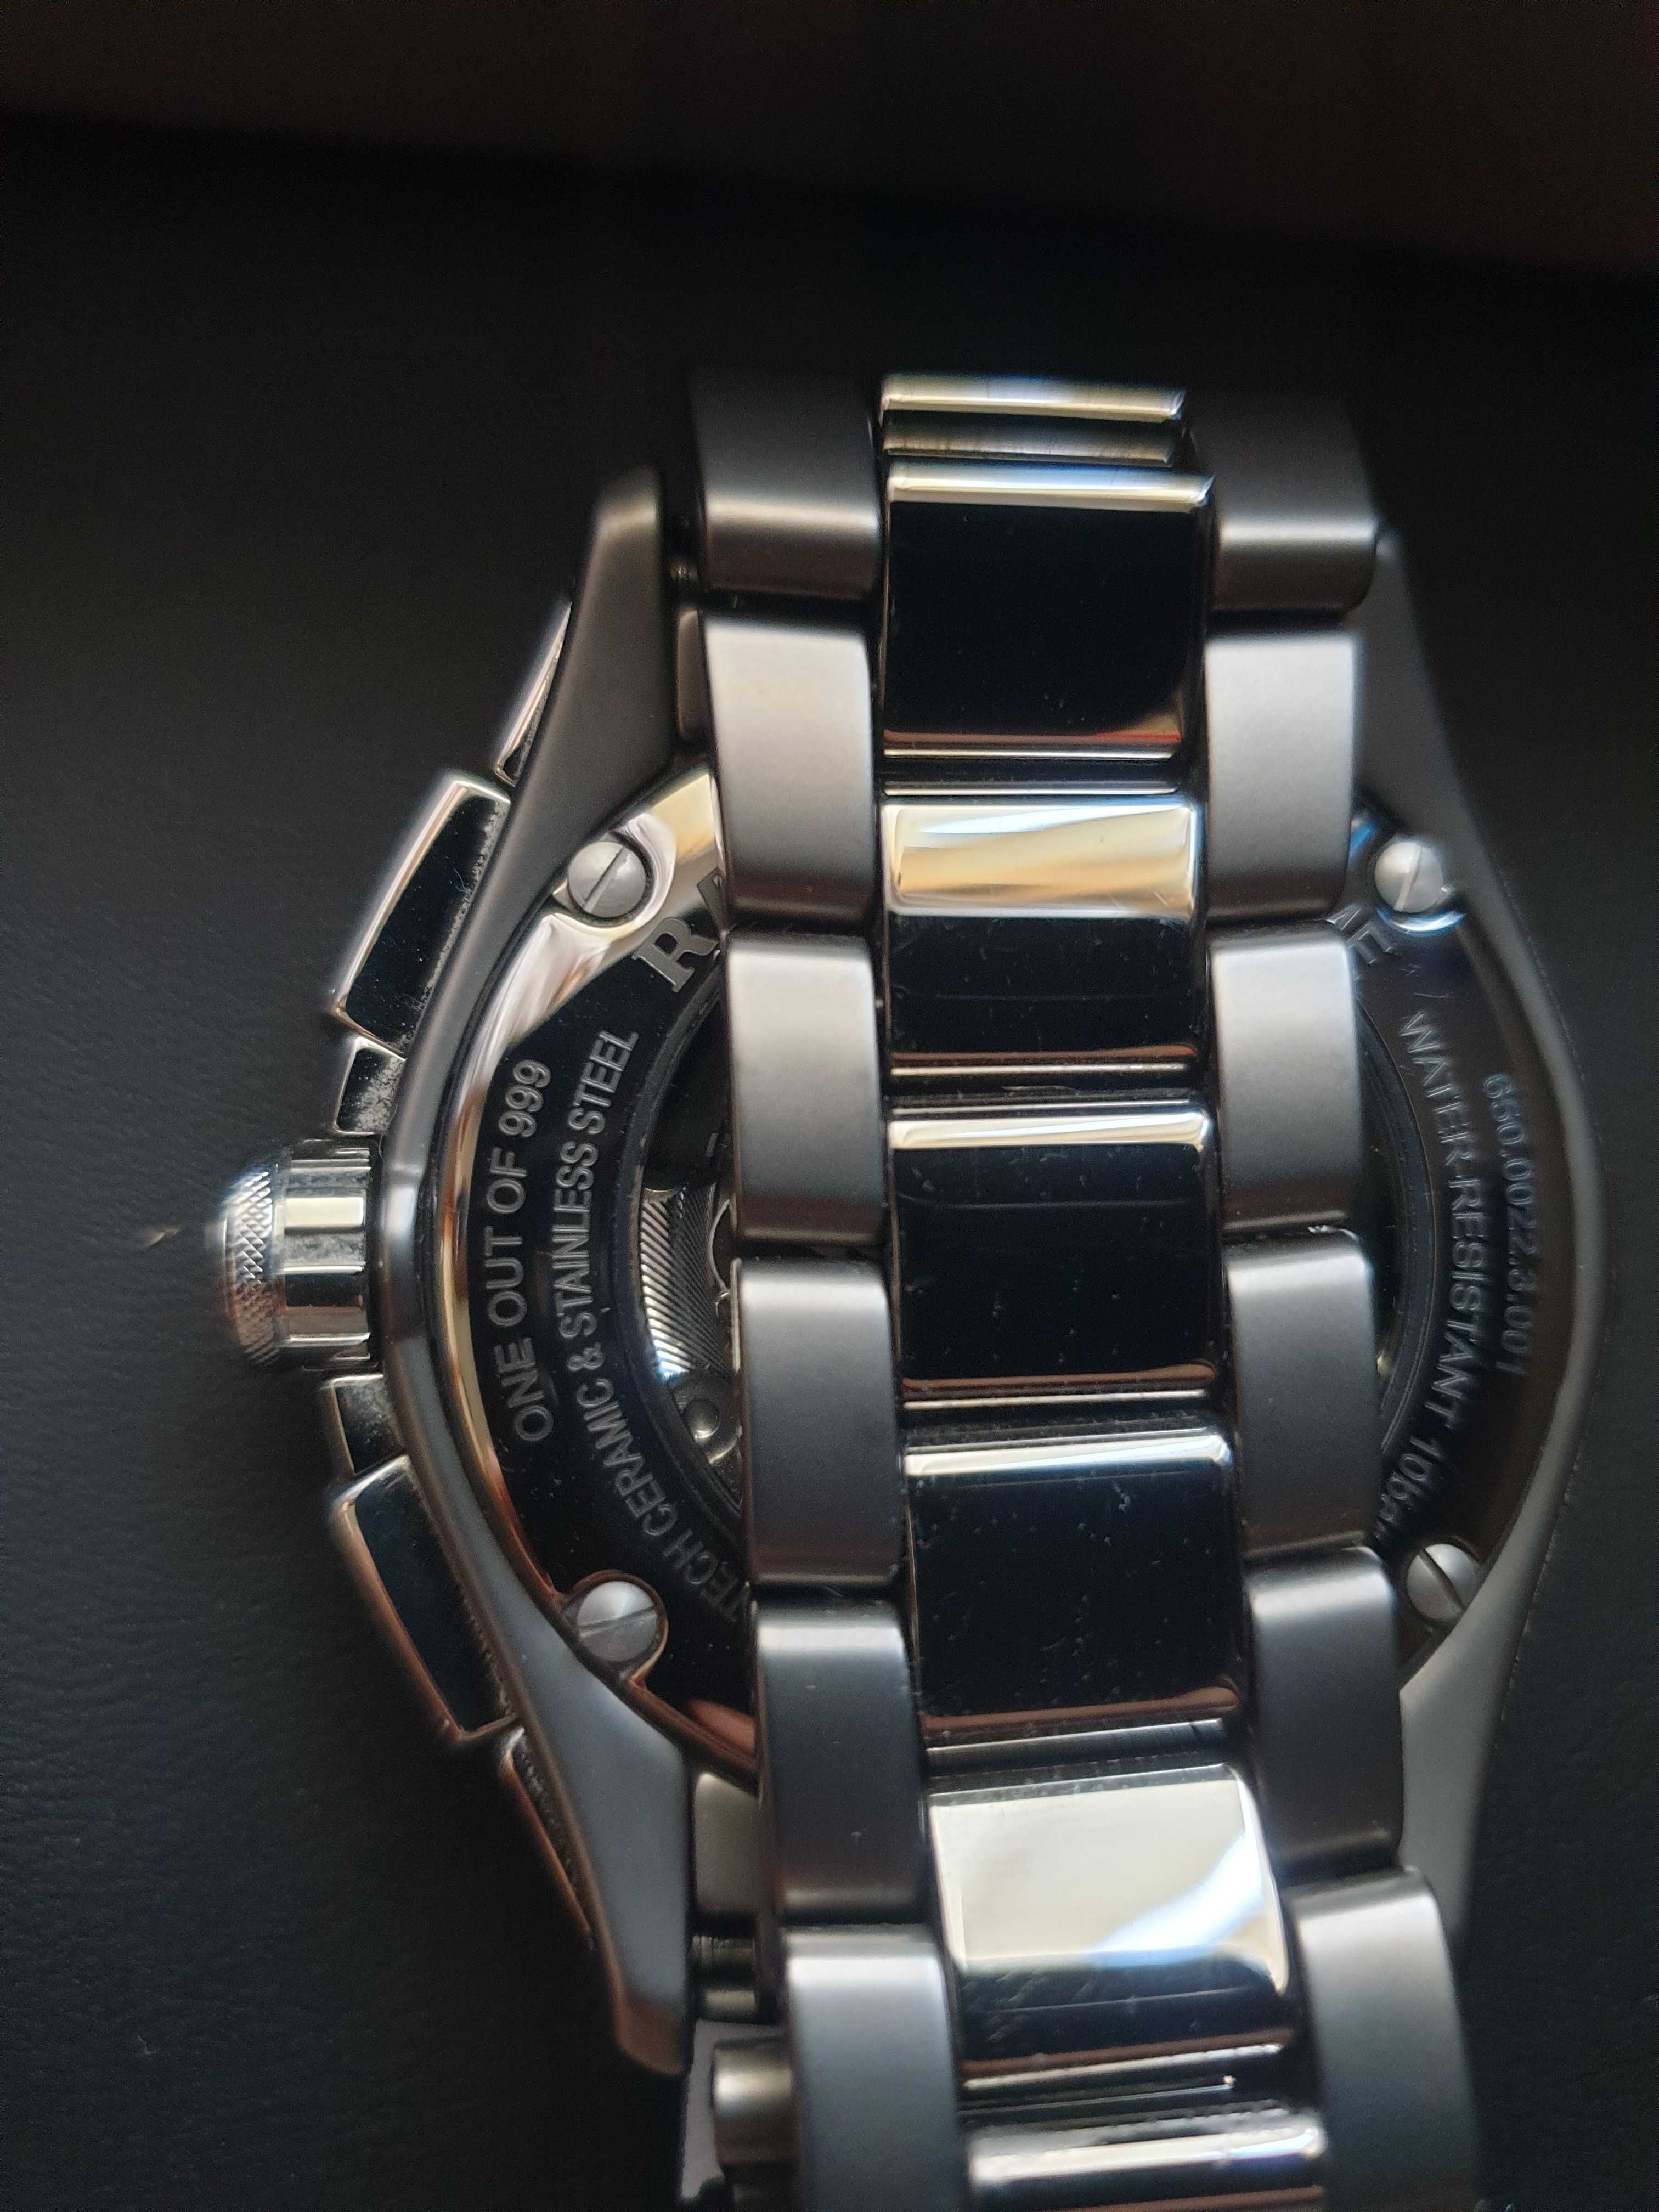 Мъжки автоматичен часовник Rado Limited Edition _1 от 999_